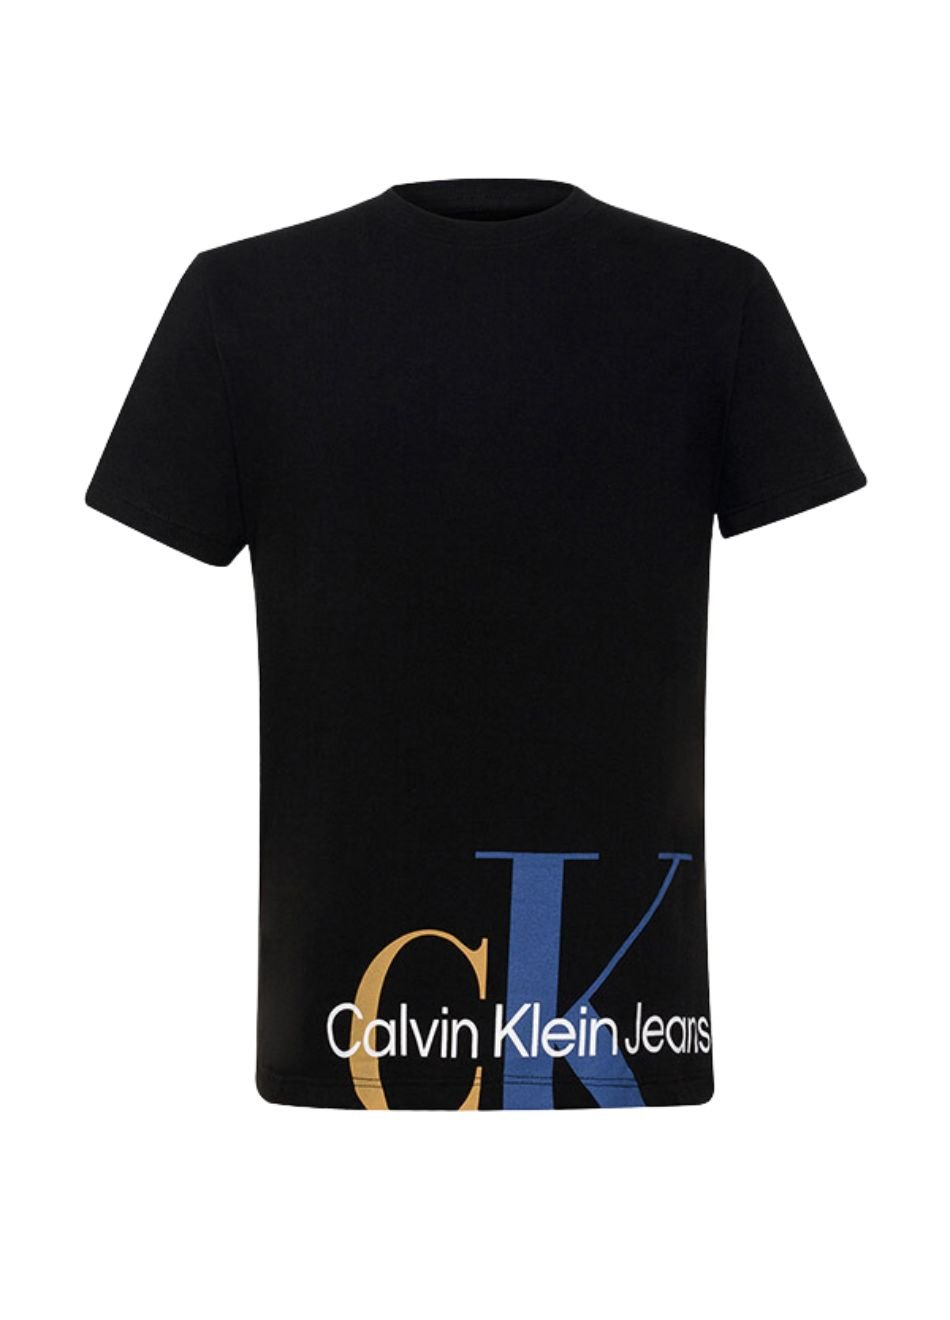 Camiseta Calvin Klein Jeans Infantil colorful Preta